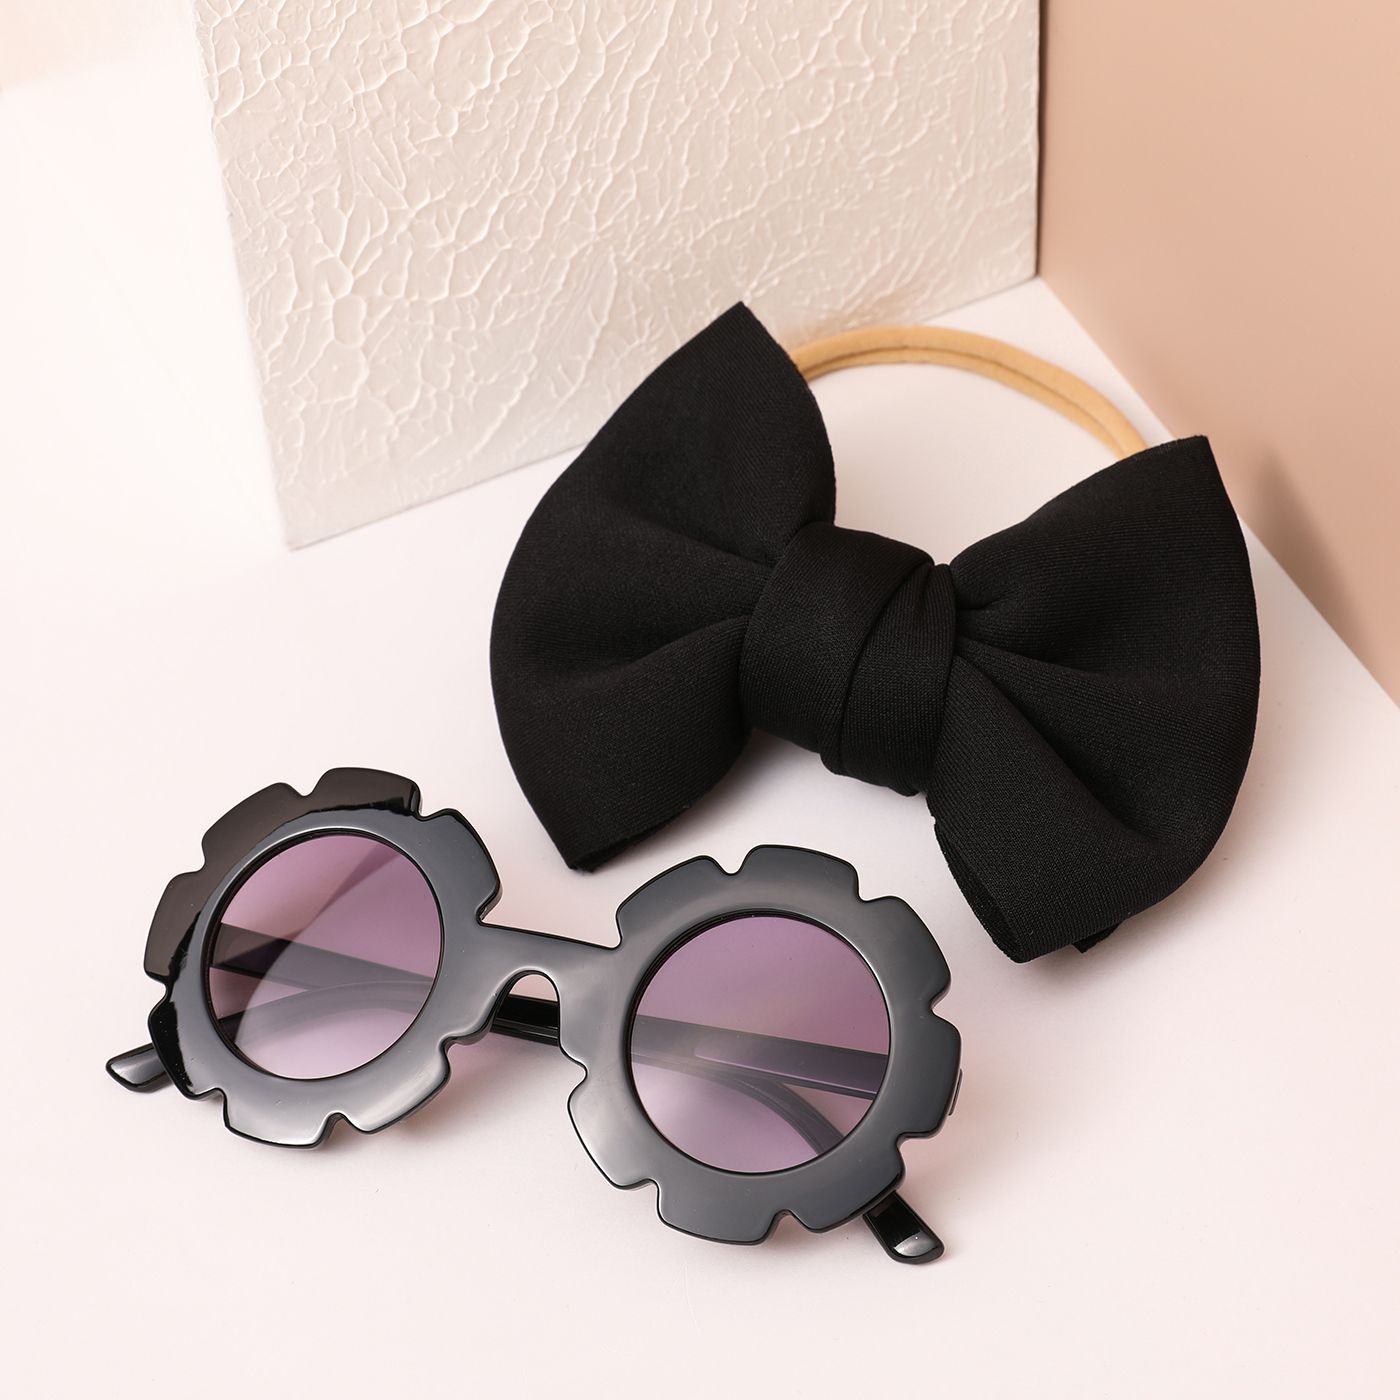 Toddler Girl 2pcs Cardigan And Rabbit Polka Dots Dress Set/ 2pcs Glasses And Headband Set/ Sandals